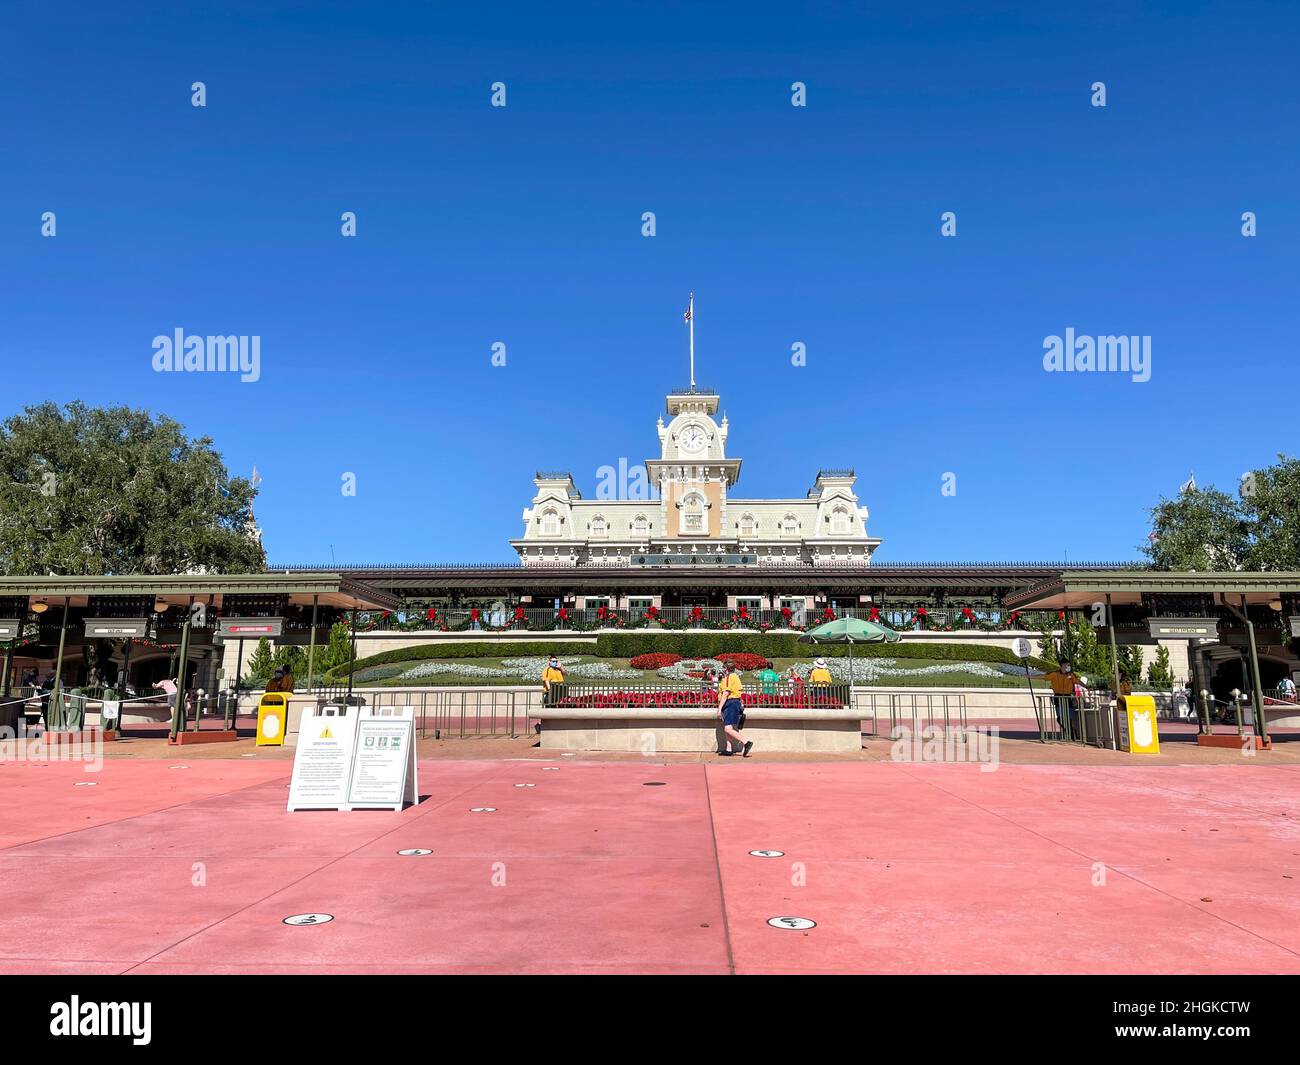 Orlando, FL USA - July 5, 2021: The train station at Walt Disney World Magic Kingdom in Orlando, Florida. Stock Photo